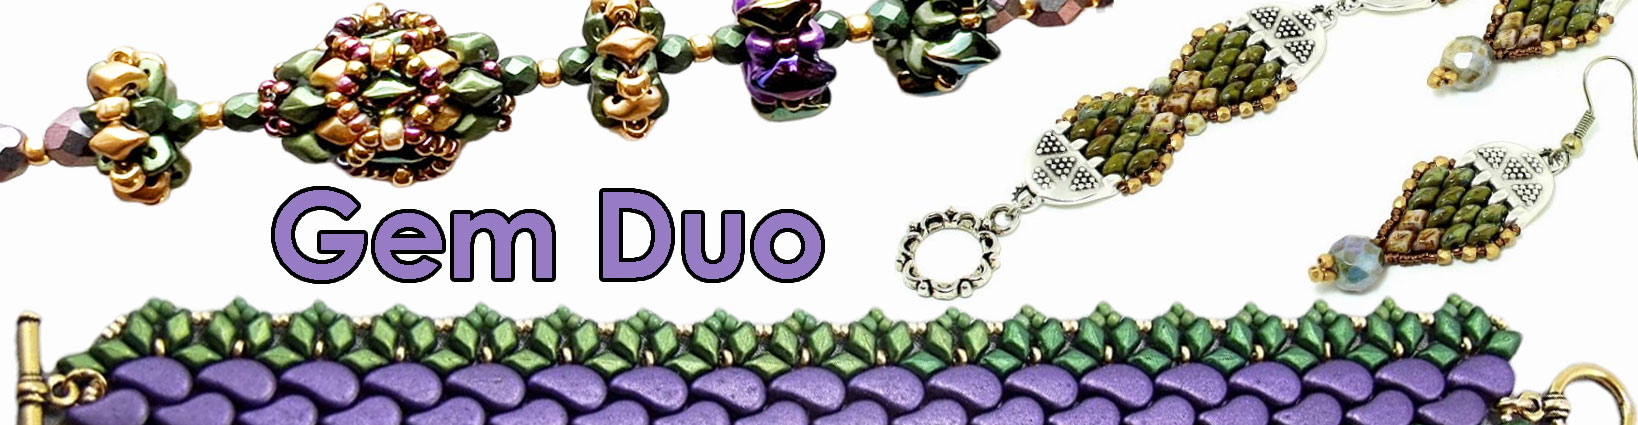 Gem Duo Beads by Matubo Japan